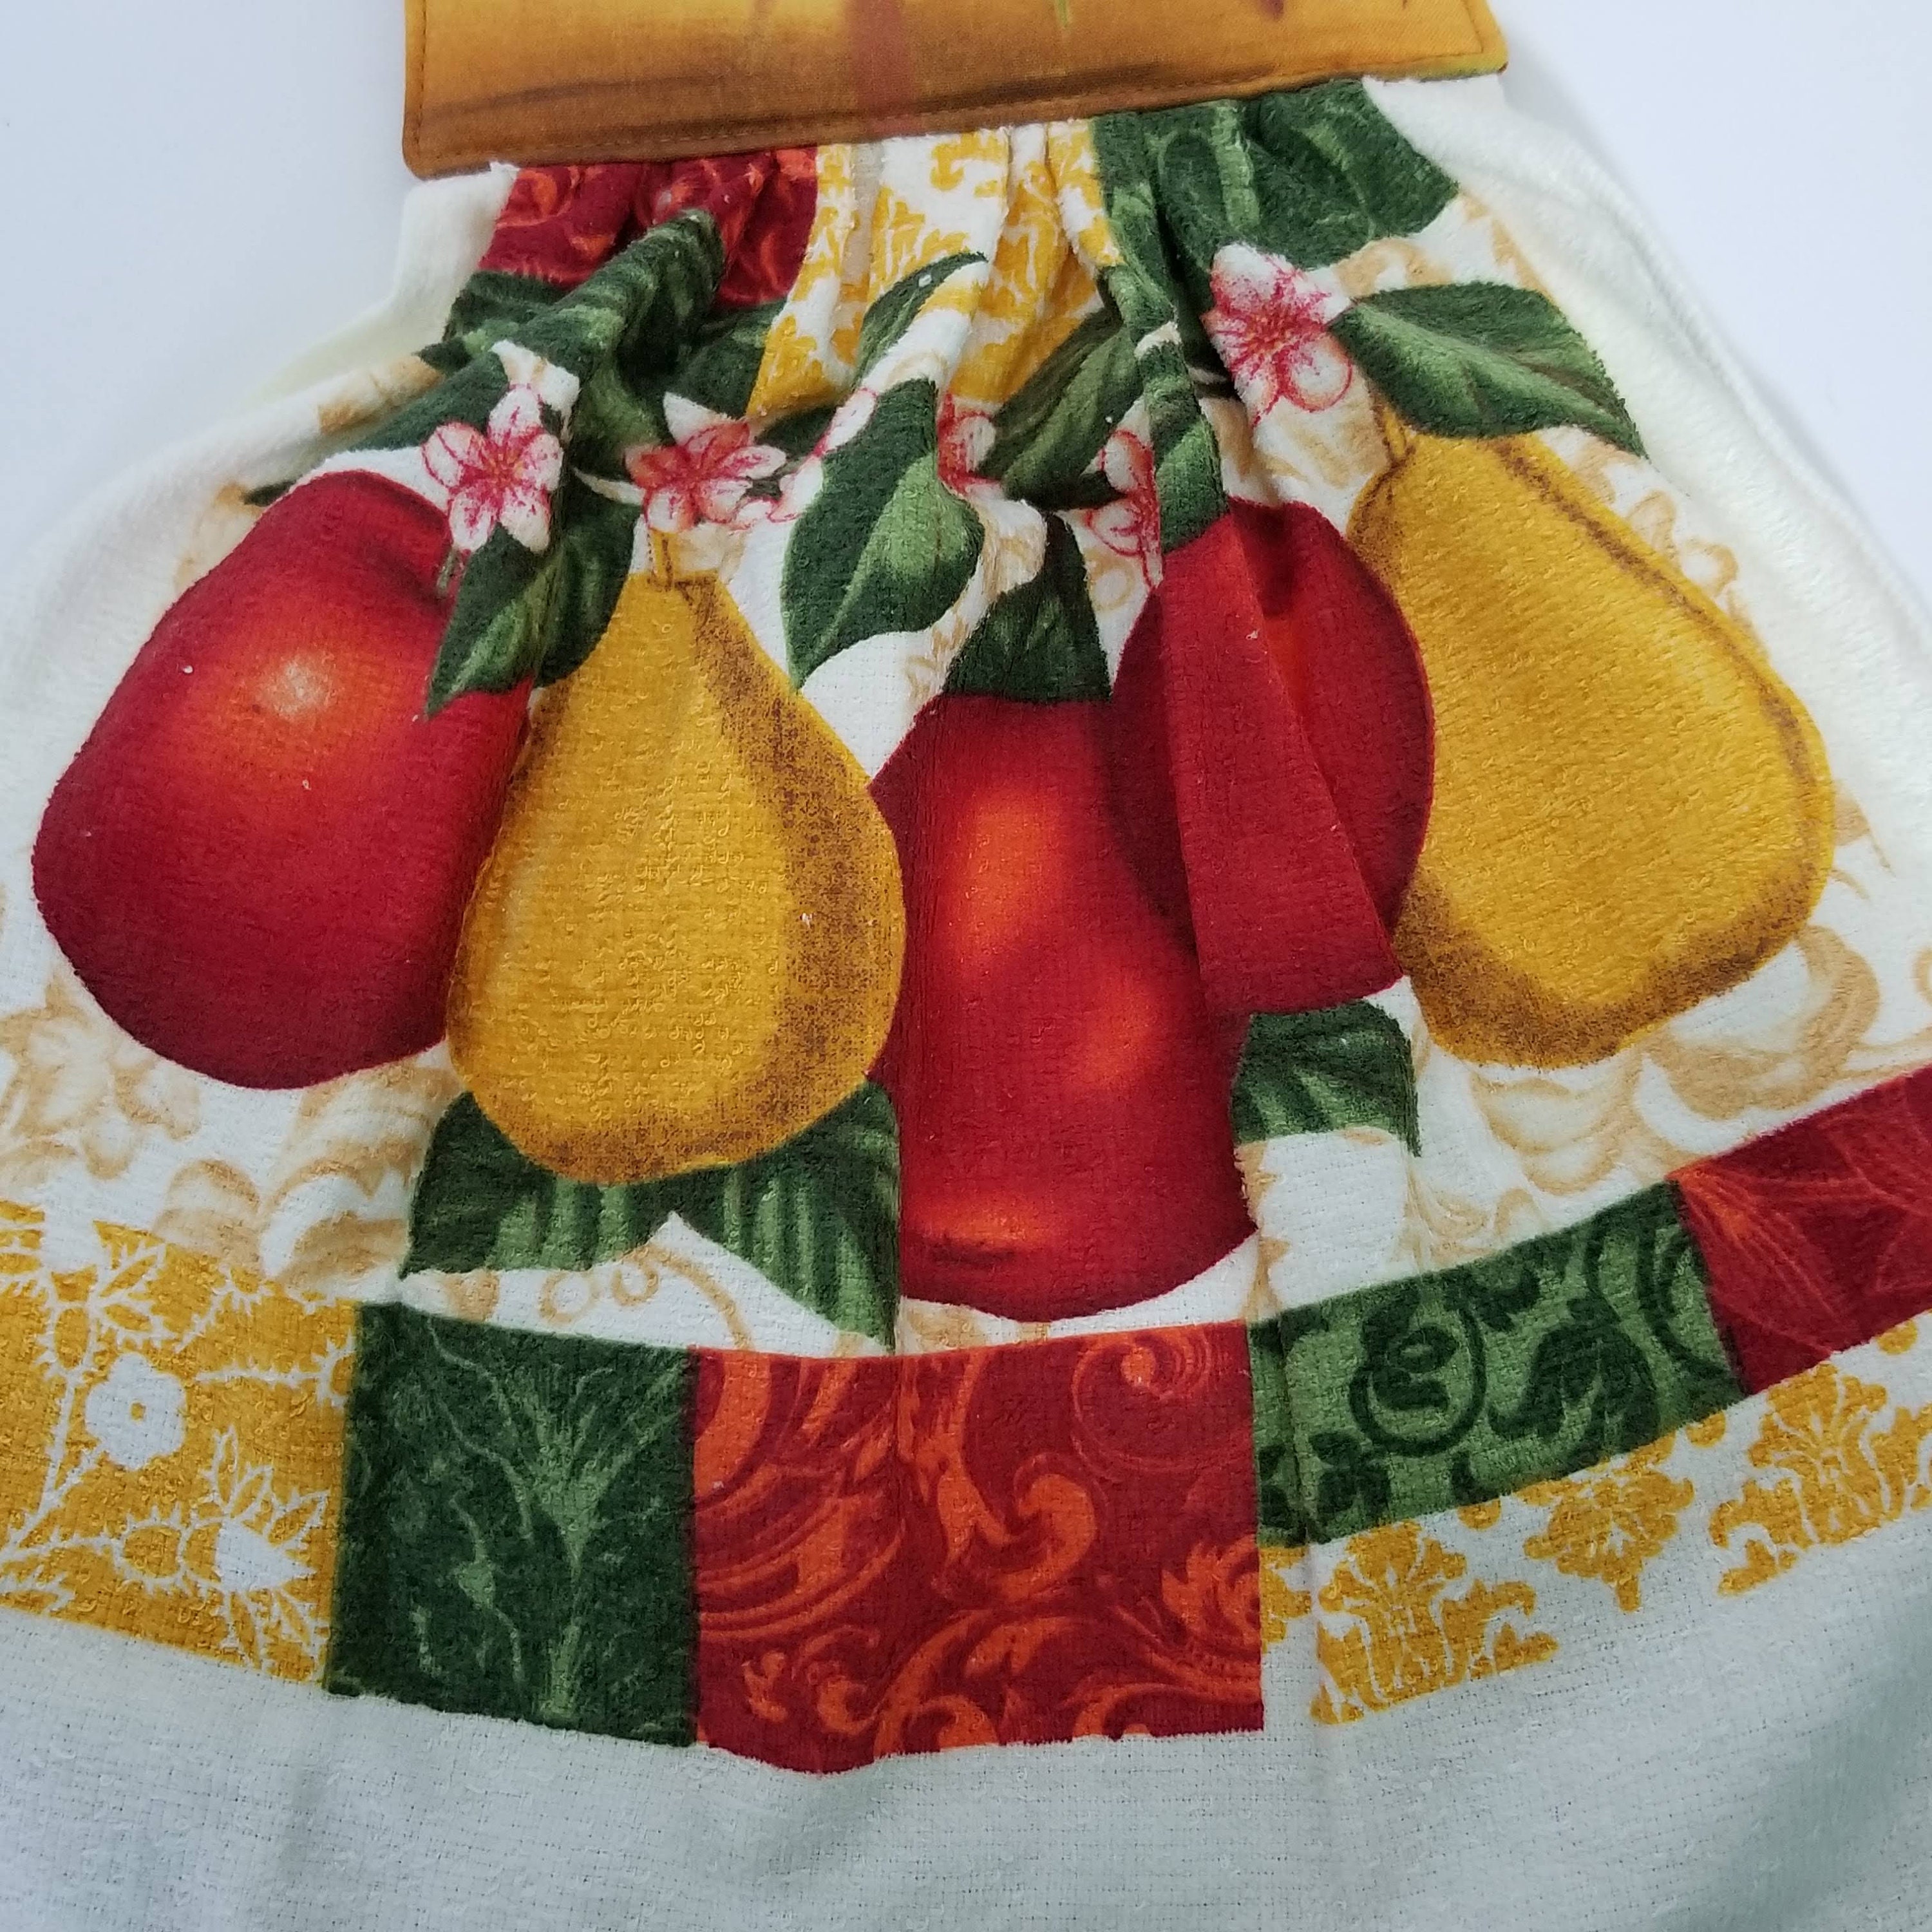 Fruit Salad Kitchen Towels handmade in Brazil